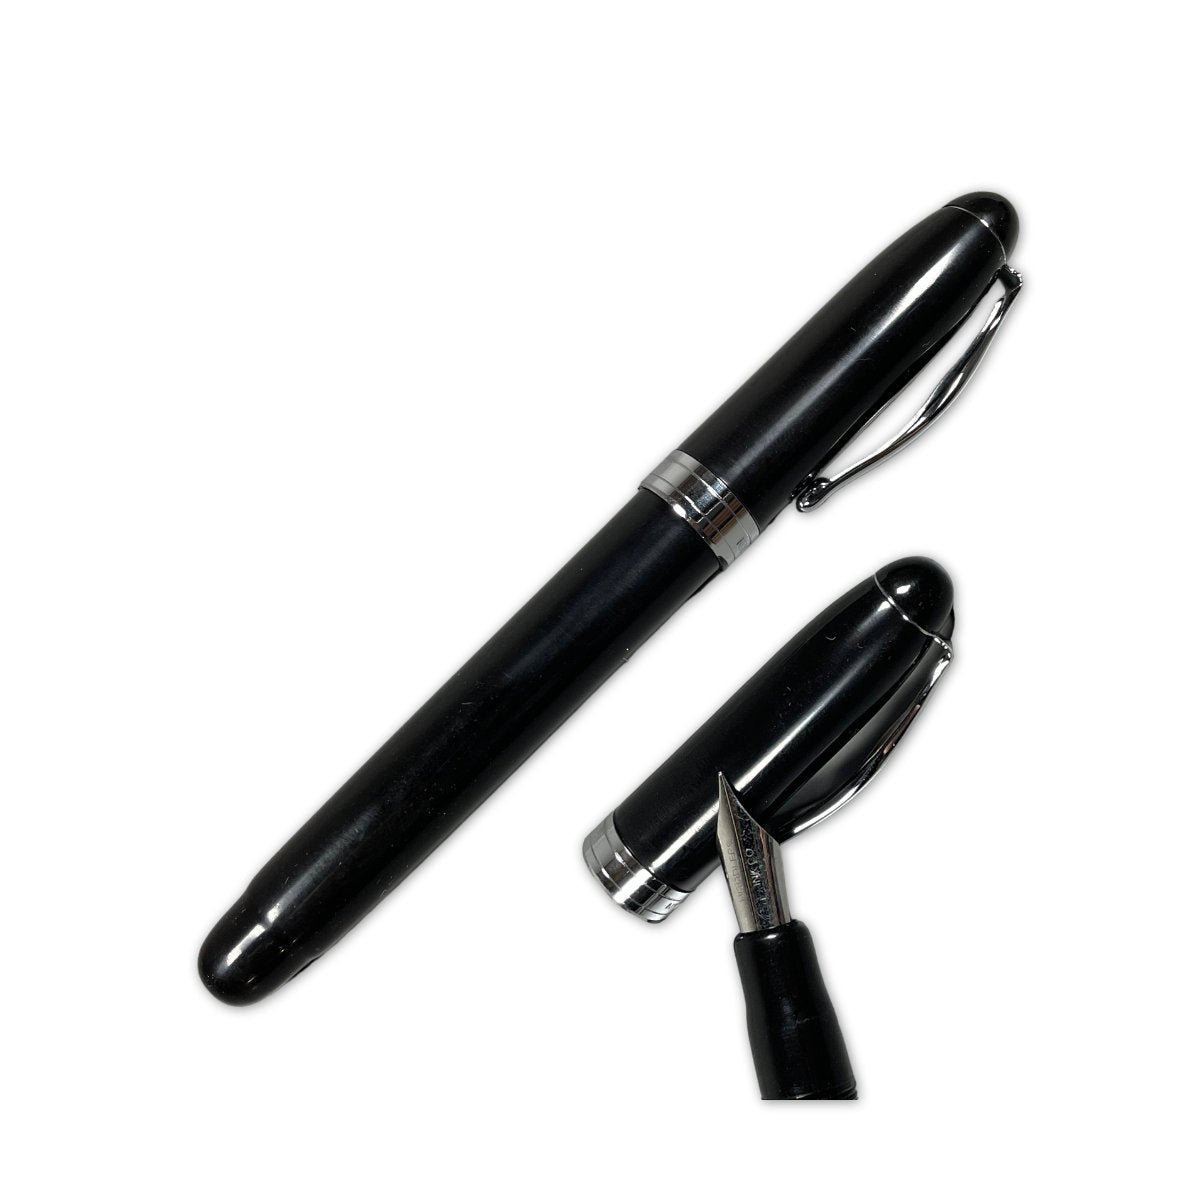 Noodlers Ahab Flex Nib Fountain Pen - Black - Notegeist